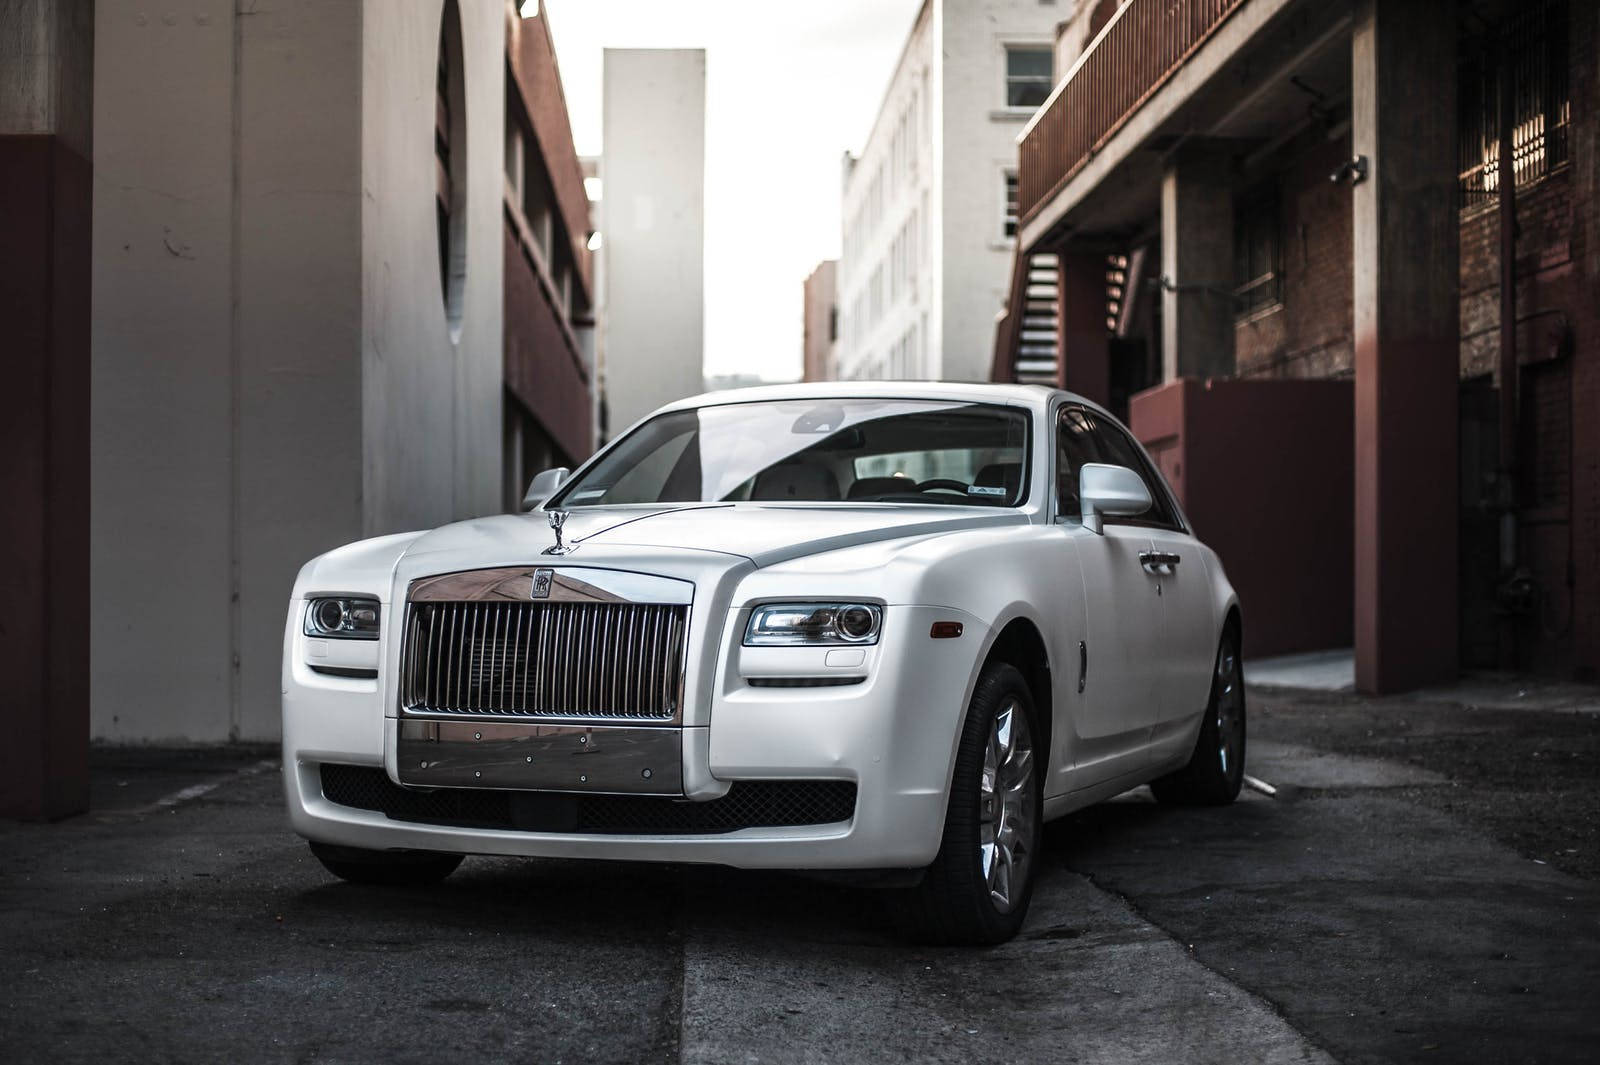 White Ghost Luxury Car Alley Shot Wallpaper